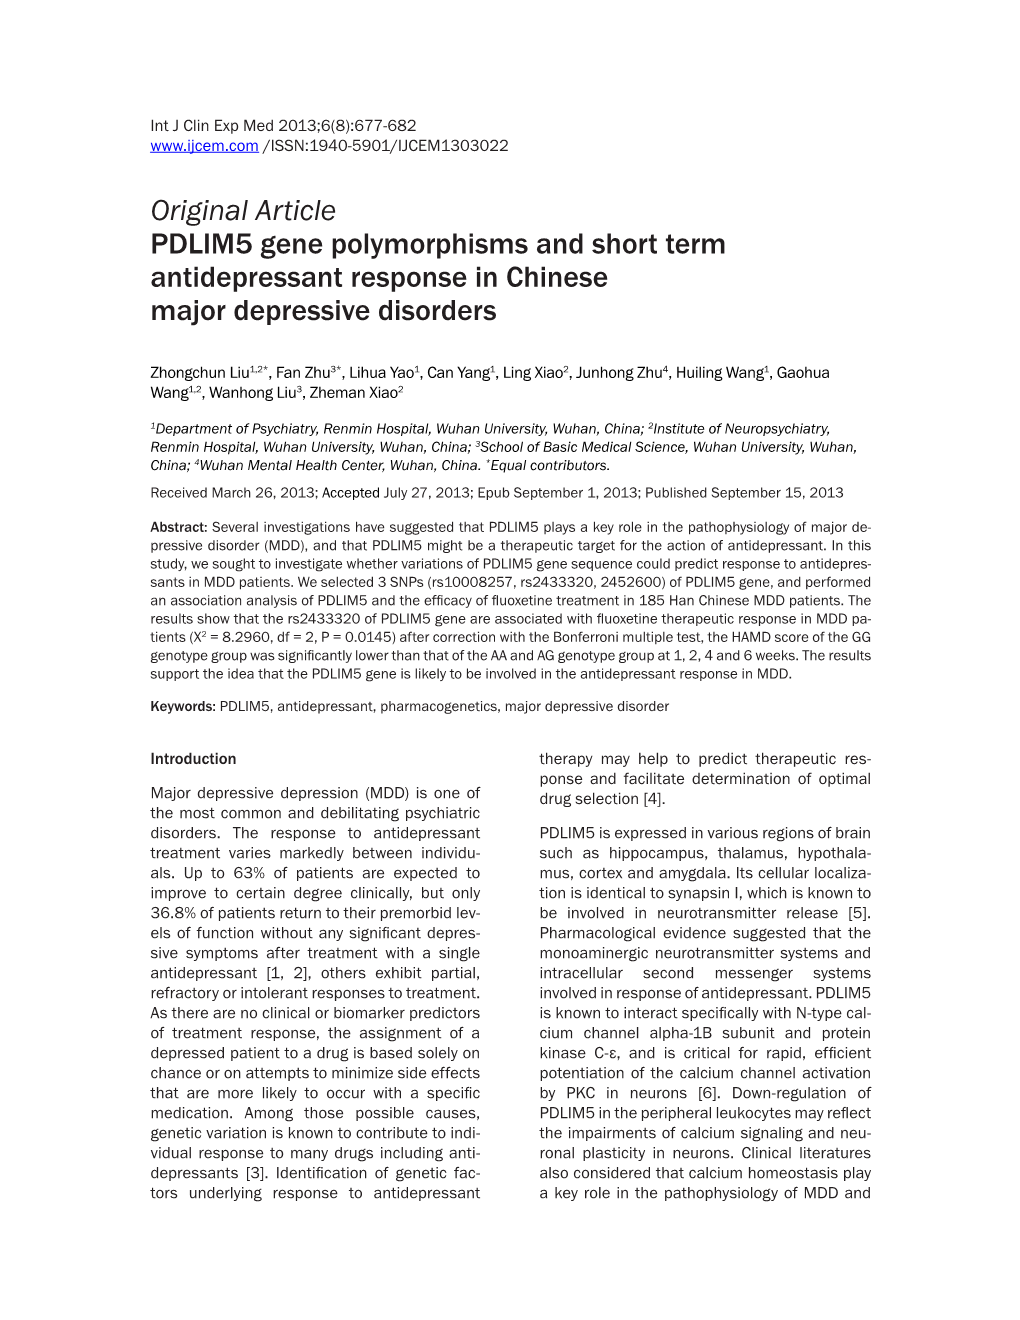 Original Article PDLIM5 Gene Polymorphisms and Short Term Antidepressant Response in Chinese Major Depressive Disorders